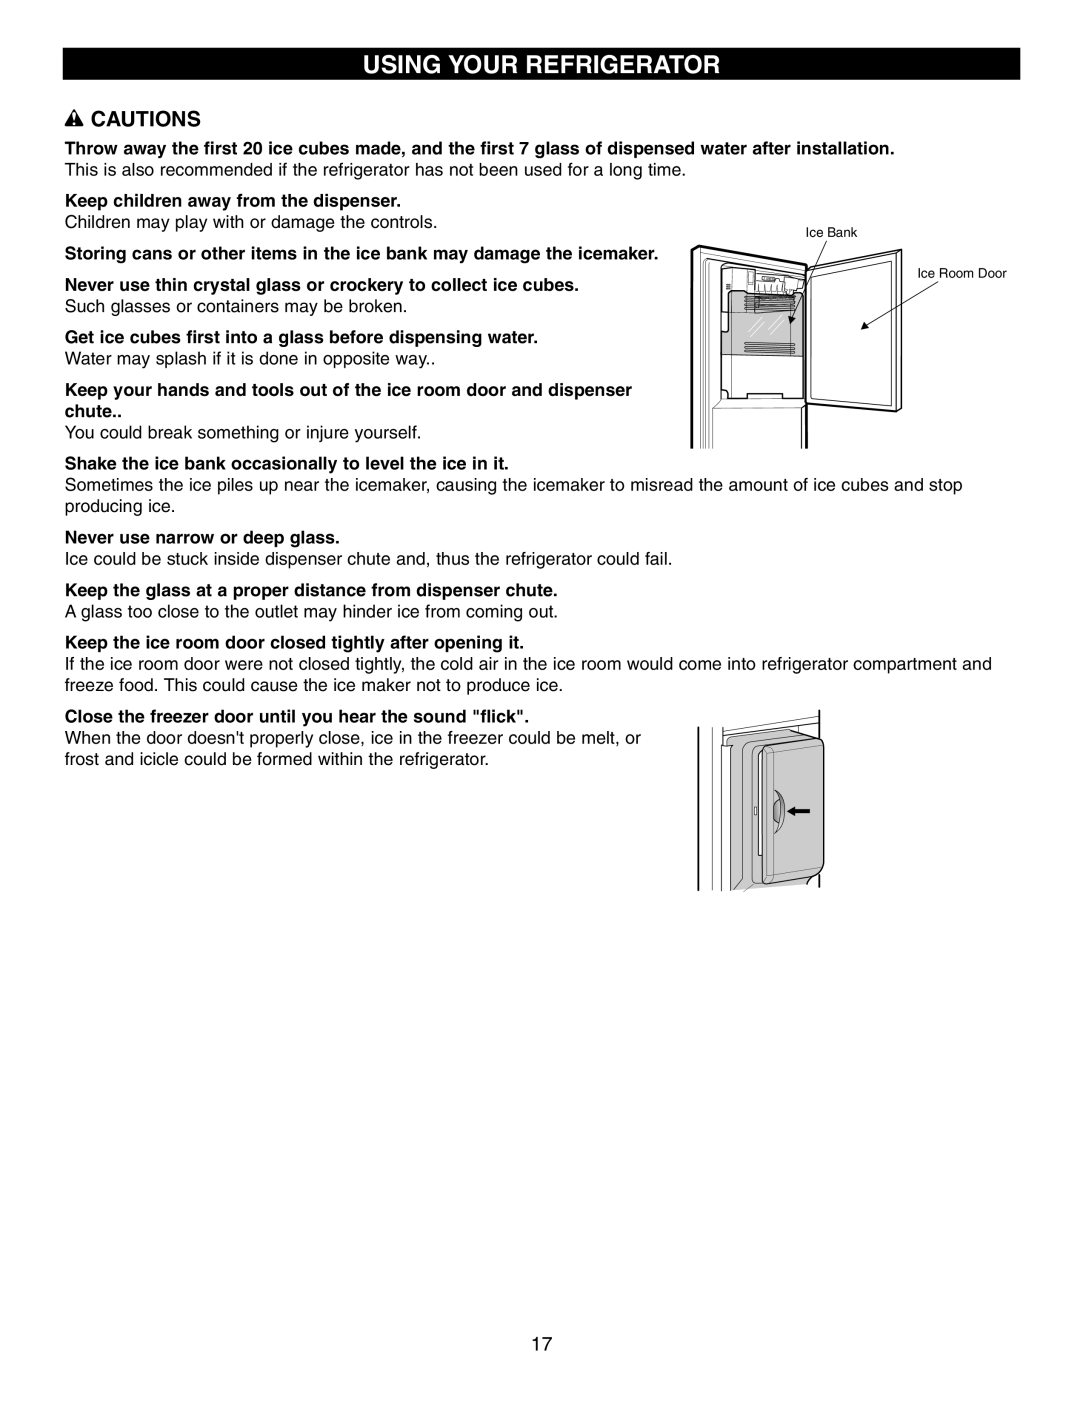 LG Electronics LFX21970, LFX25960, LFX25970 manual Using Your Refrigerator, w CAUTIONS, Keep children away from the dispenser 